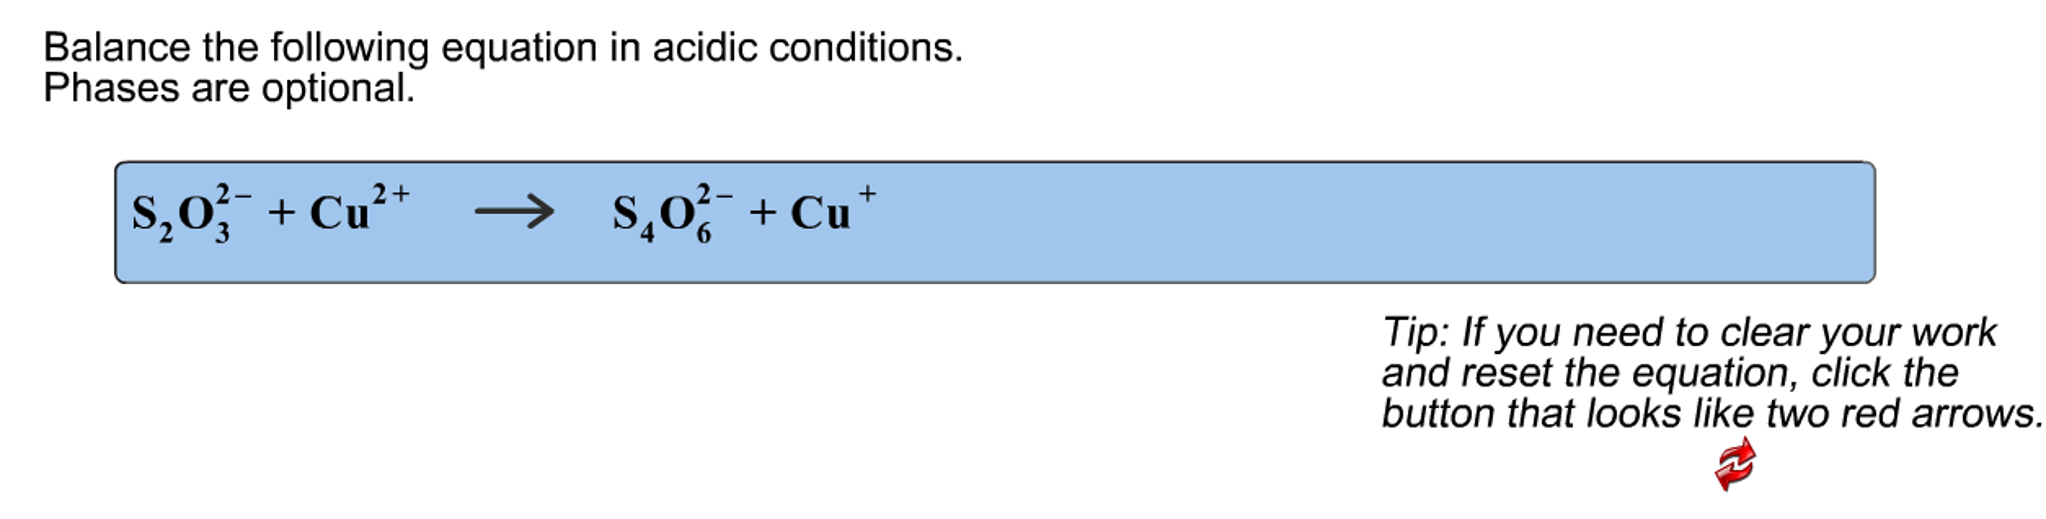 acidic chemical equation balancing calculator